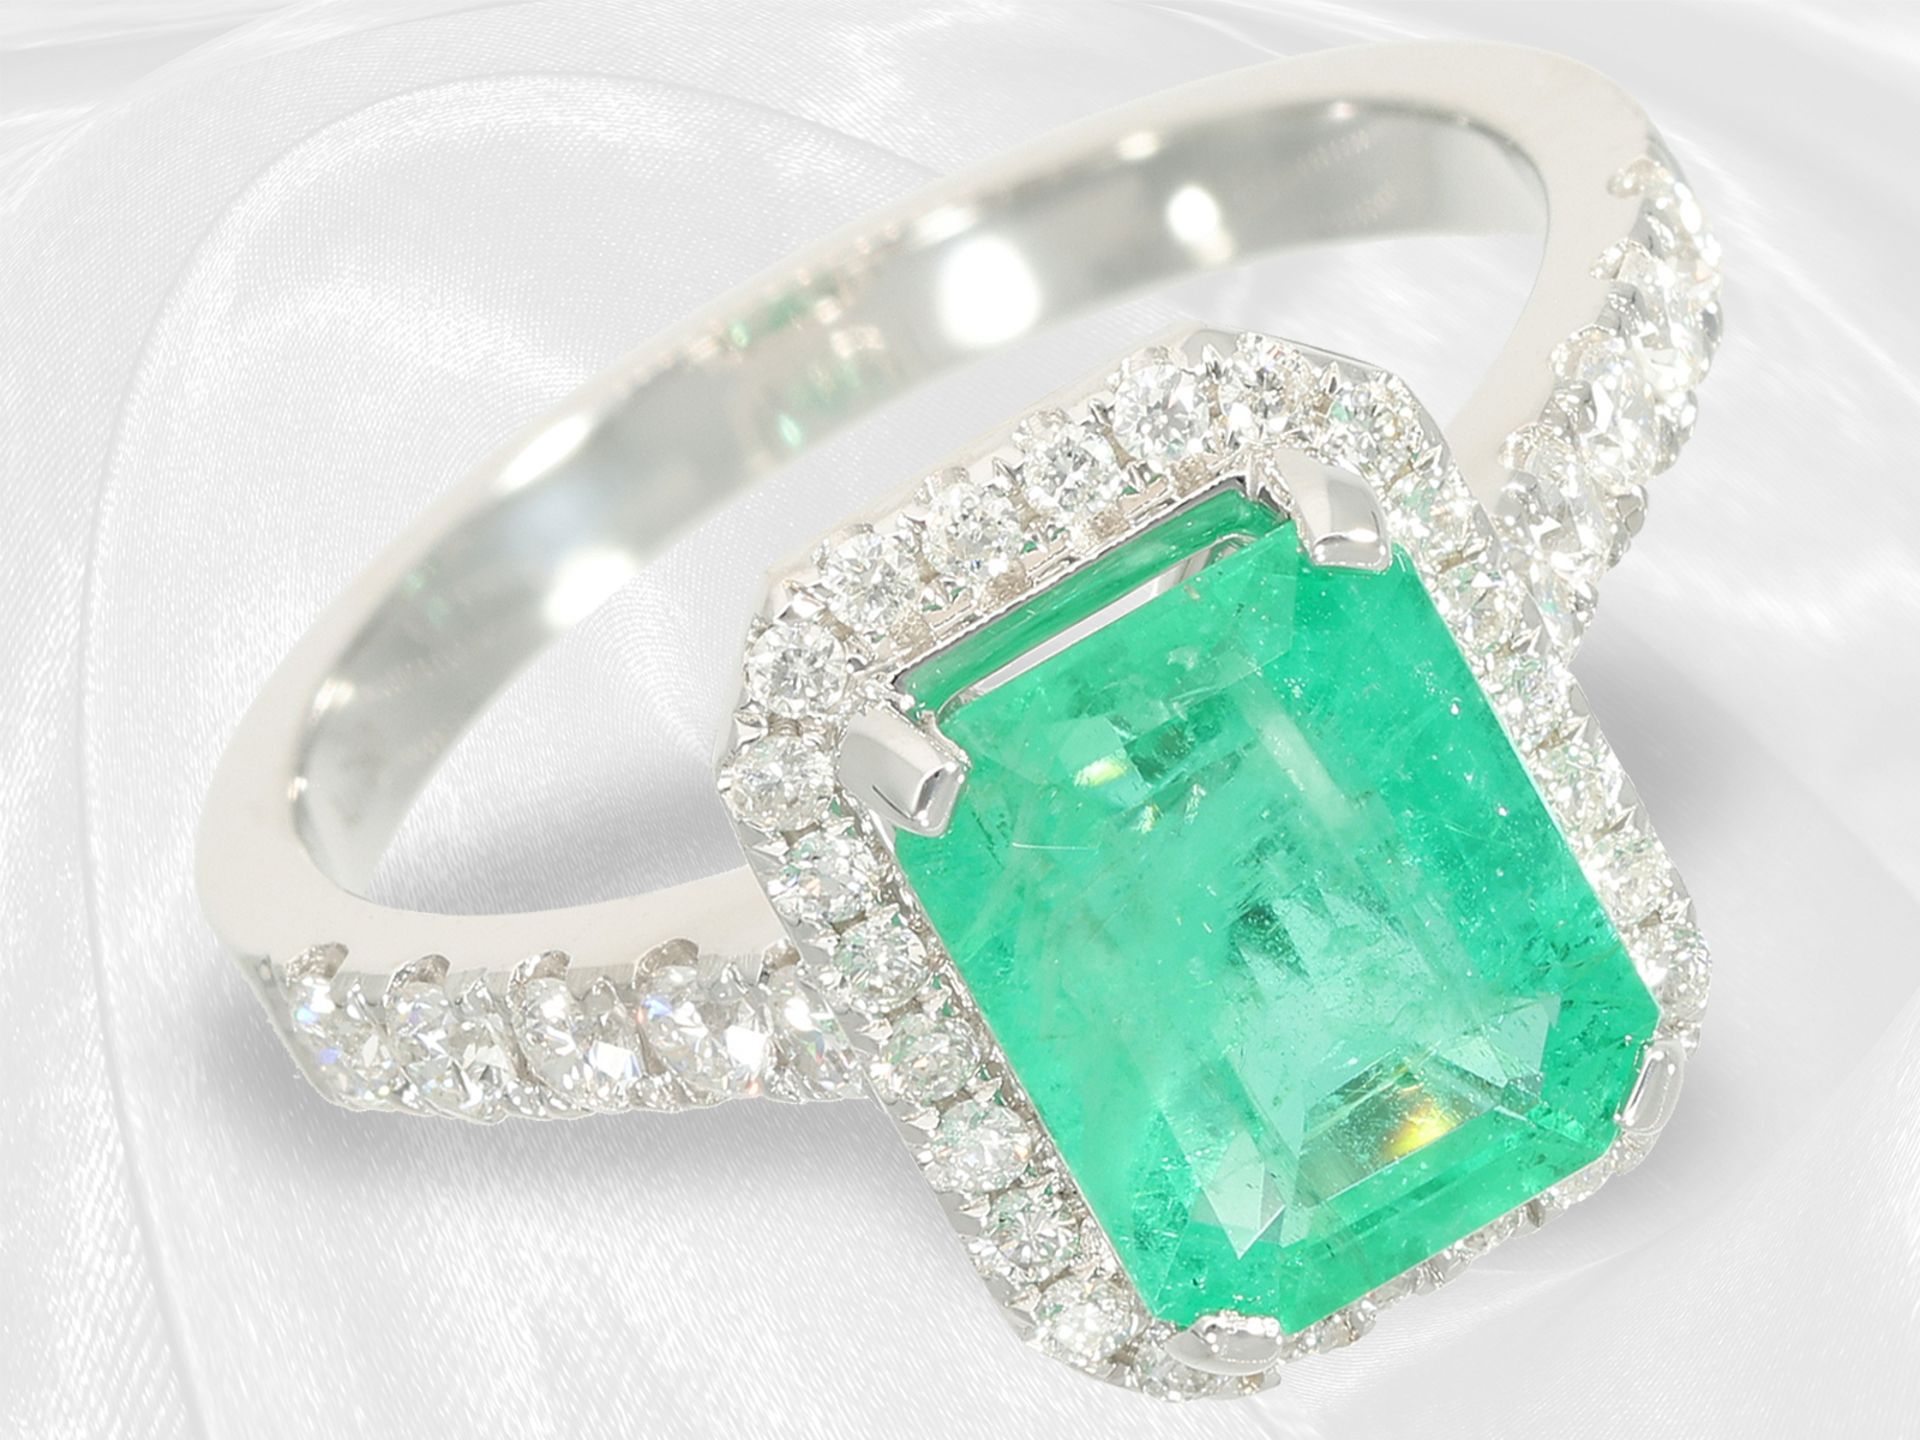 Unworn emerald/brilliant-cut diamond goldsmith ring, bright green emerald of approx. 2.3ct, 18K whit - Image 3 of 5